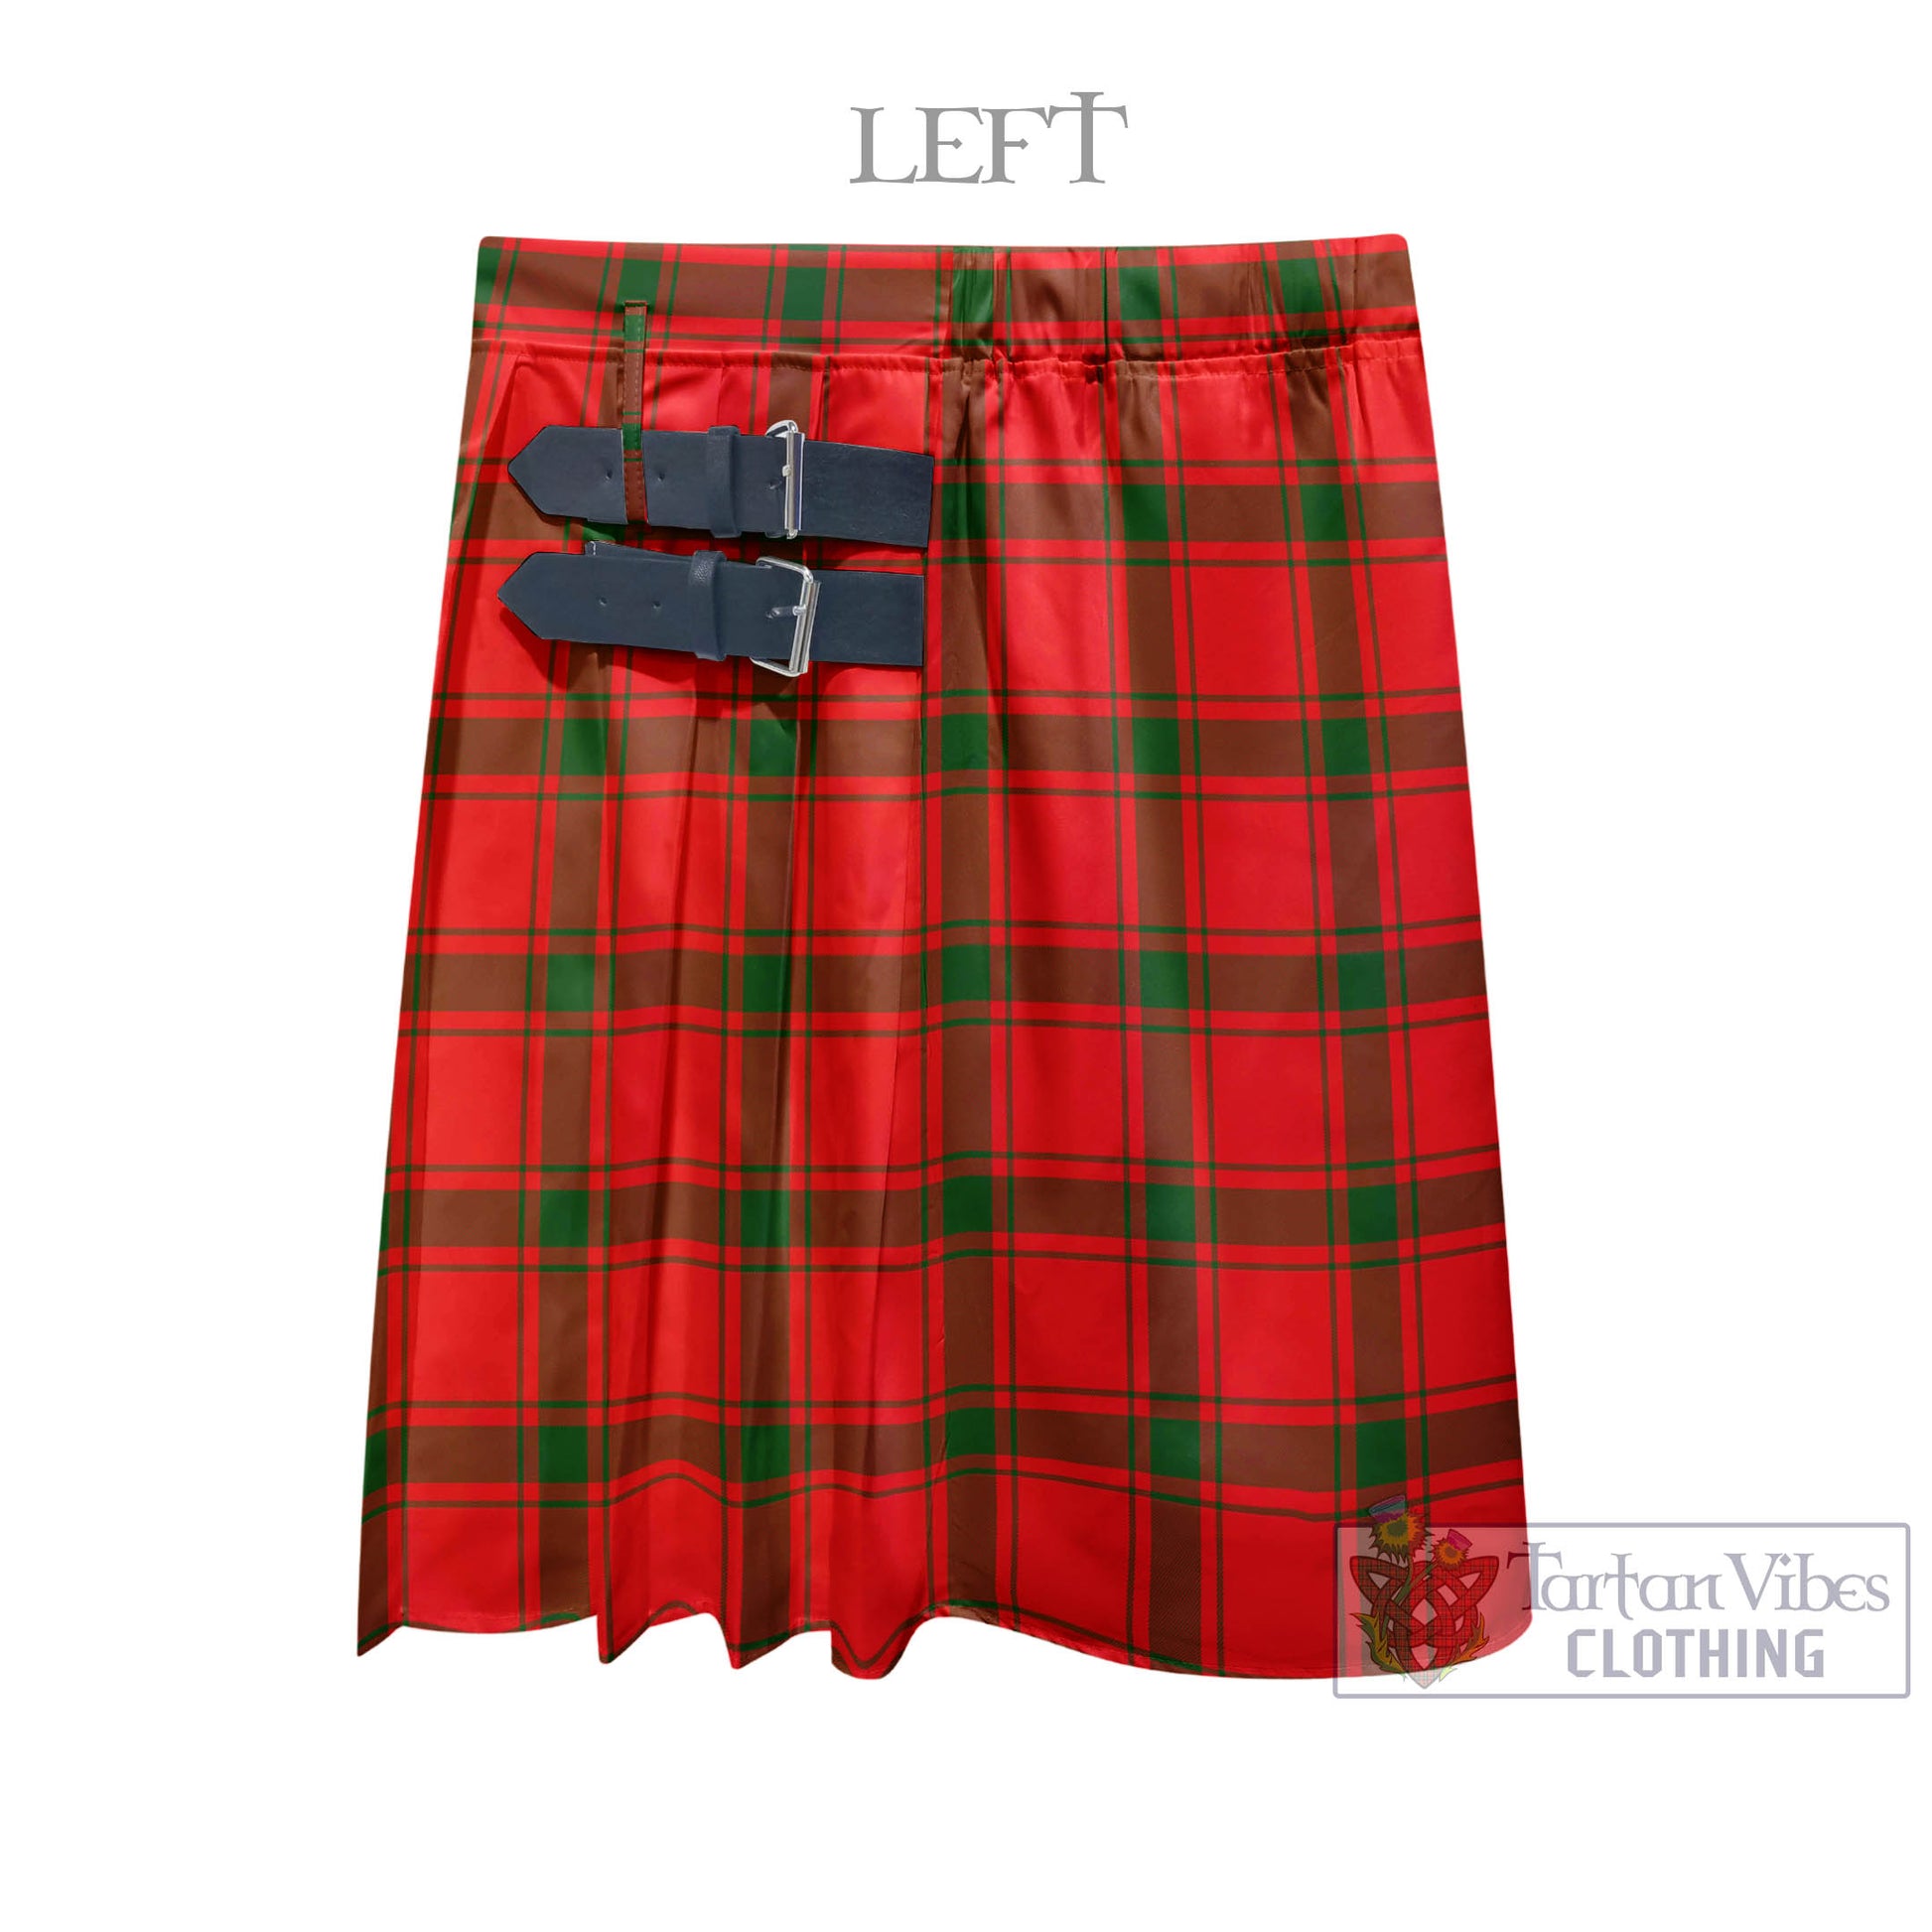 Tartan Vibes Clothing Darroch Tartan Men's Pleated Skirt - Fashion Casual Retro Scottish Style